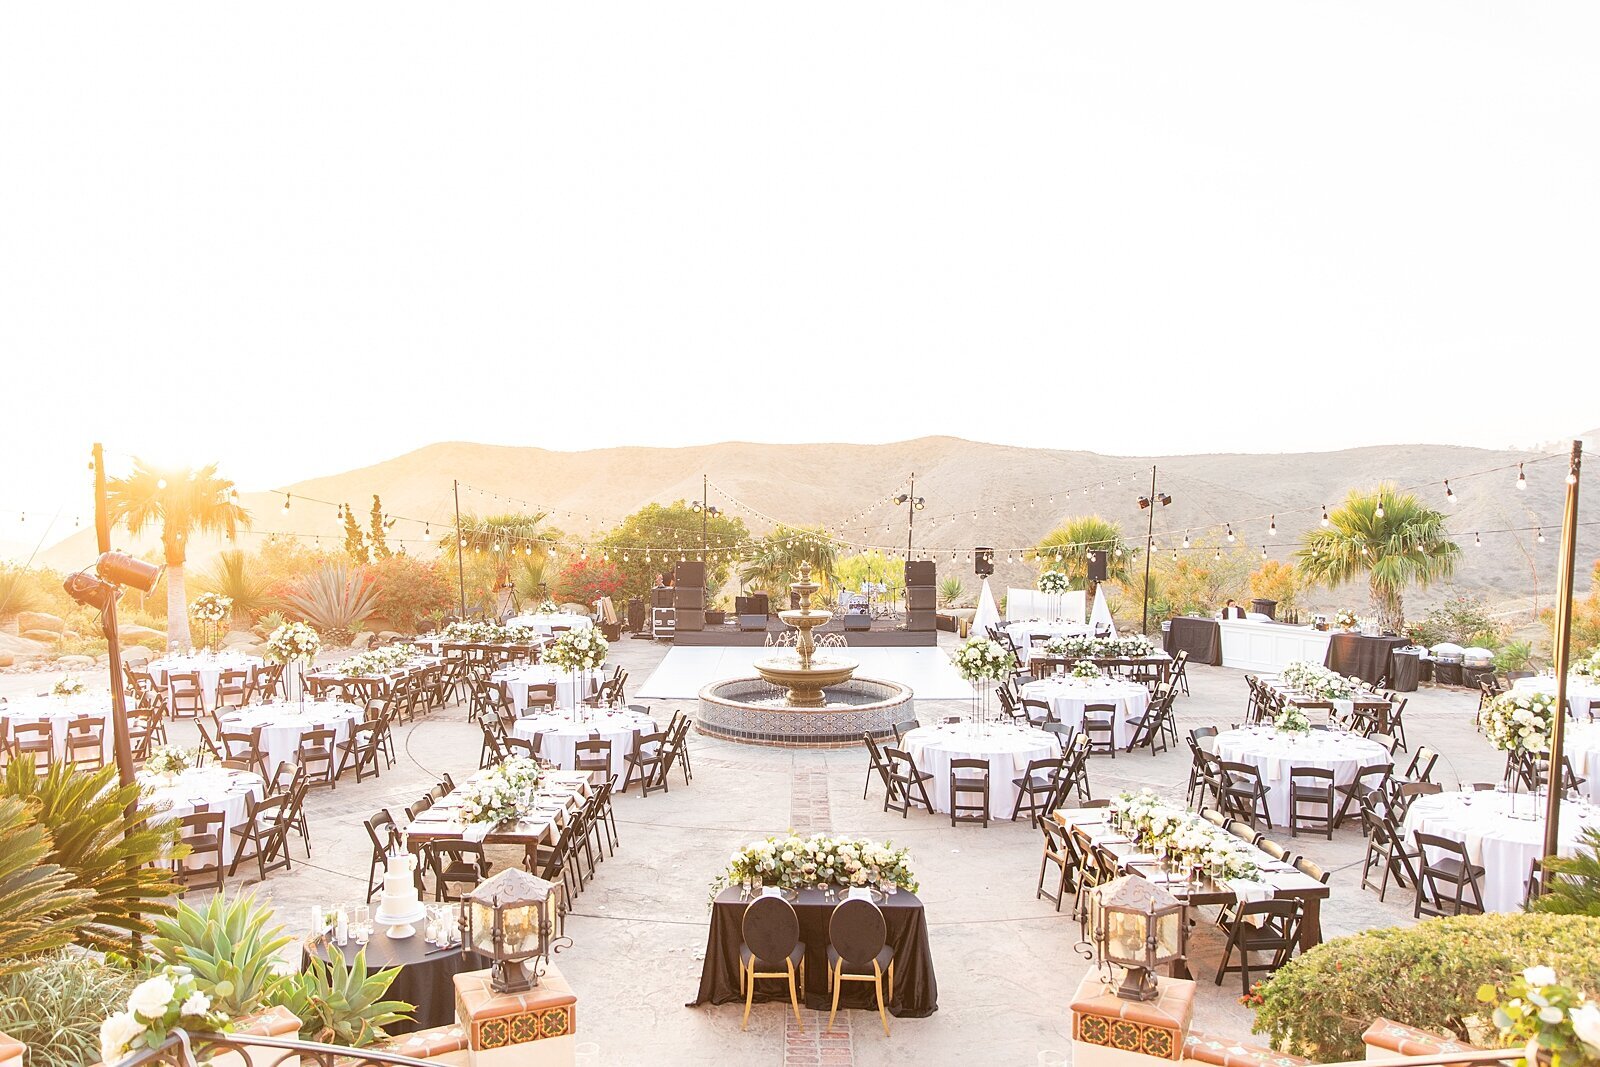 Hummingbird Nest Wedding Reception in Santa Susana by Sherr Weddings based in Southern Calfornia.